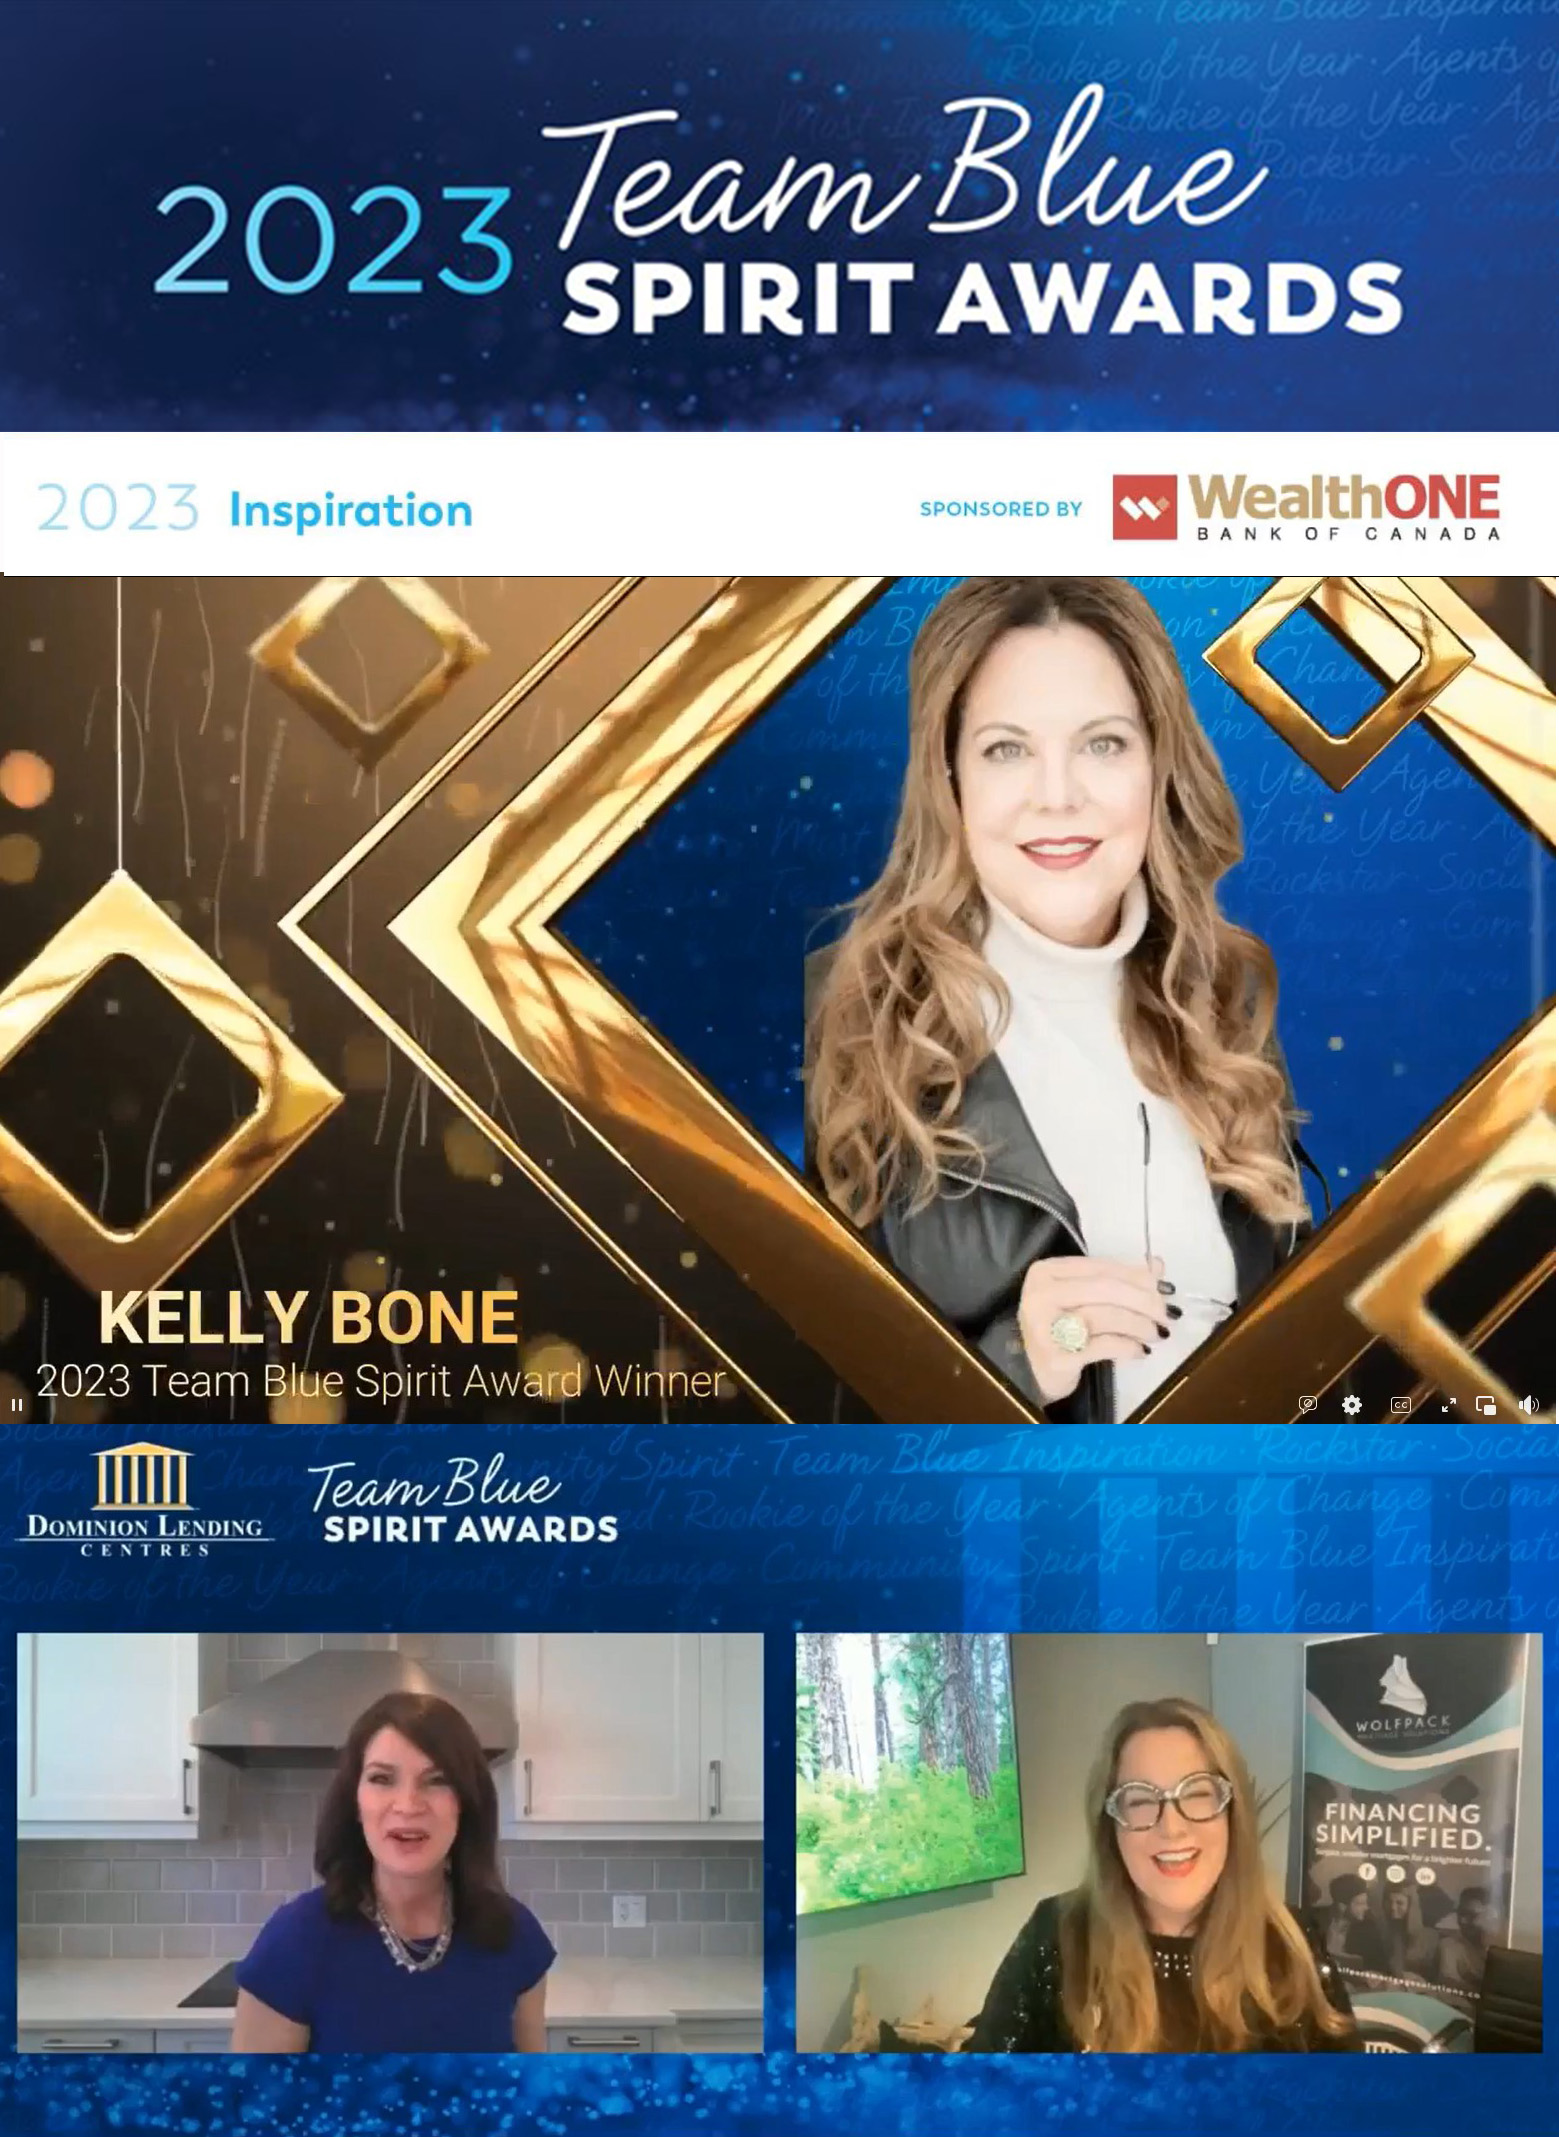 Portrait of the award winner Kelly Bone and a screenshot of her live speech